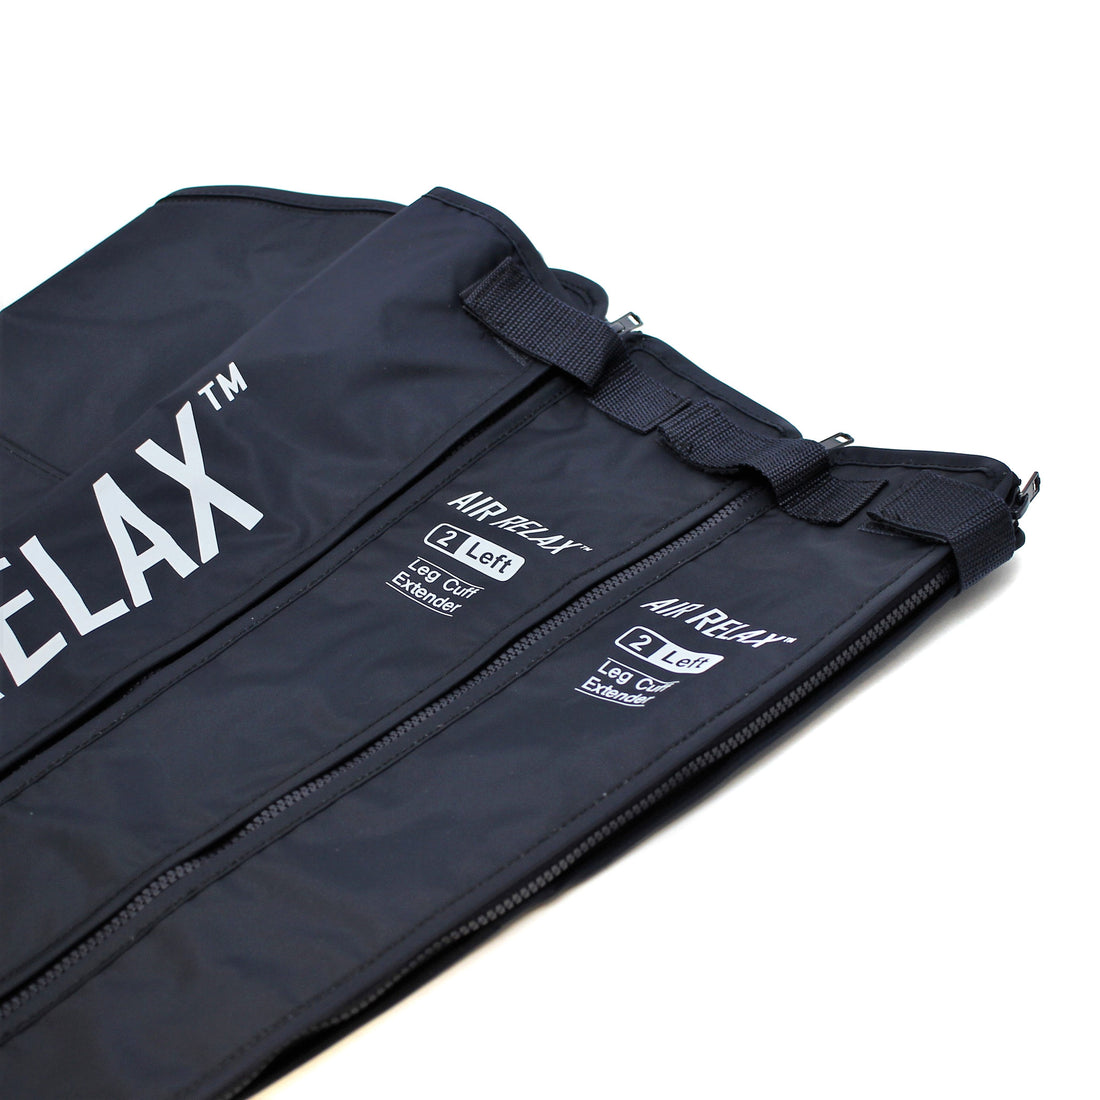 AIR RELAX leg sleeves extenders for triathlon